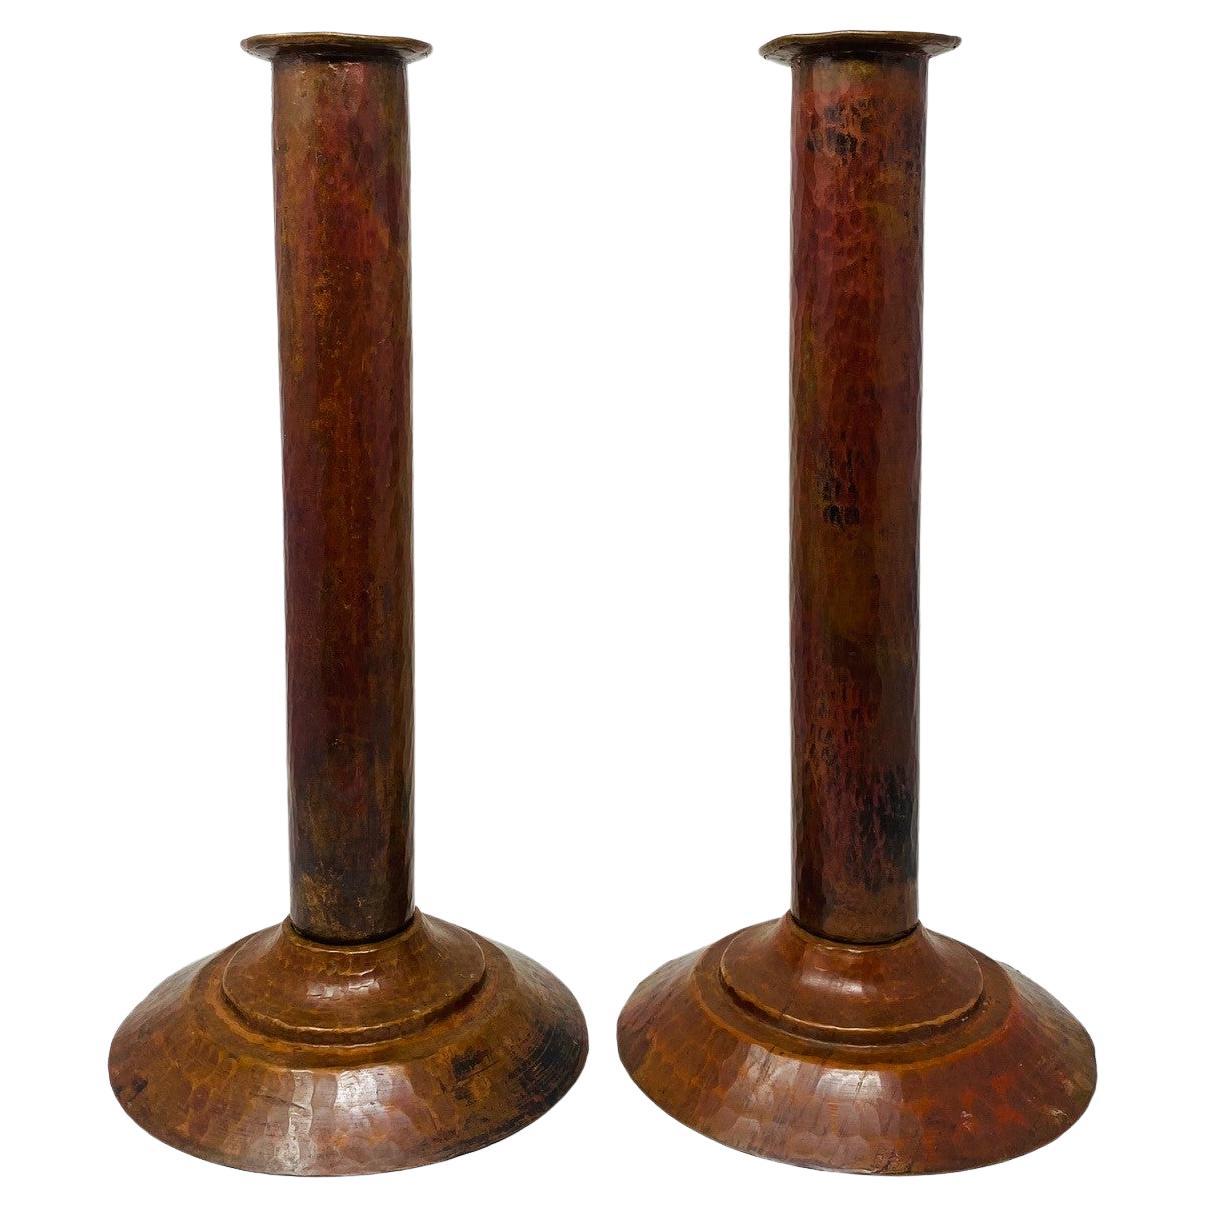 Sculptural Post Modern Hammered Copper Candleholders (Pair)